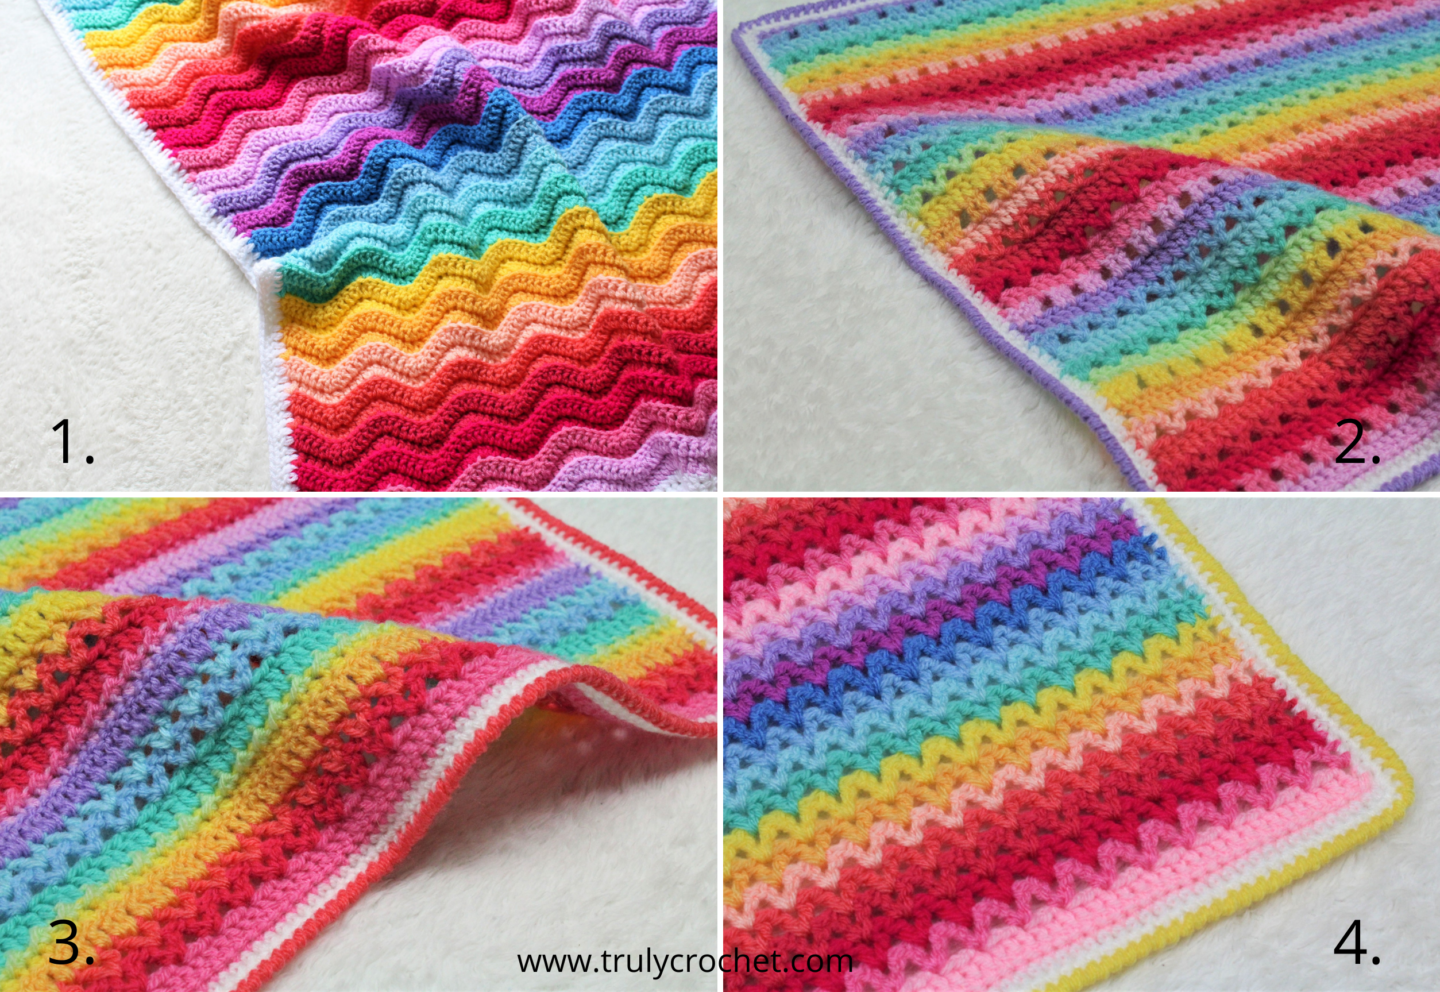 Other Crochet Patterns